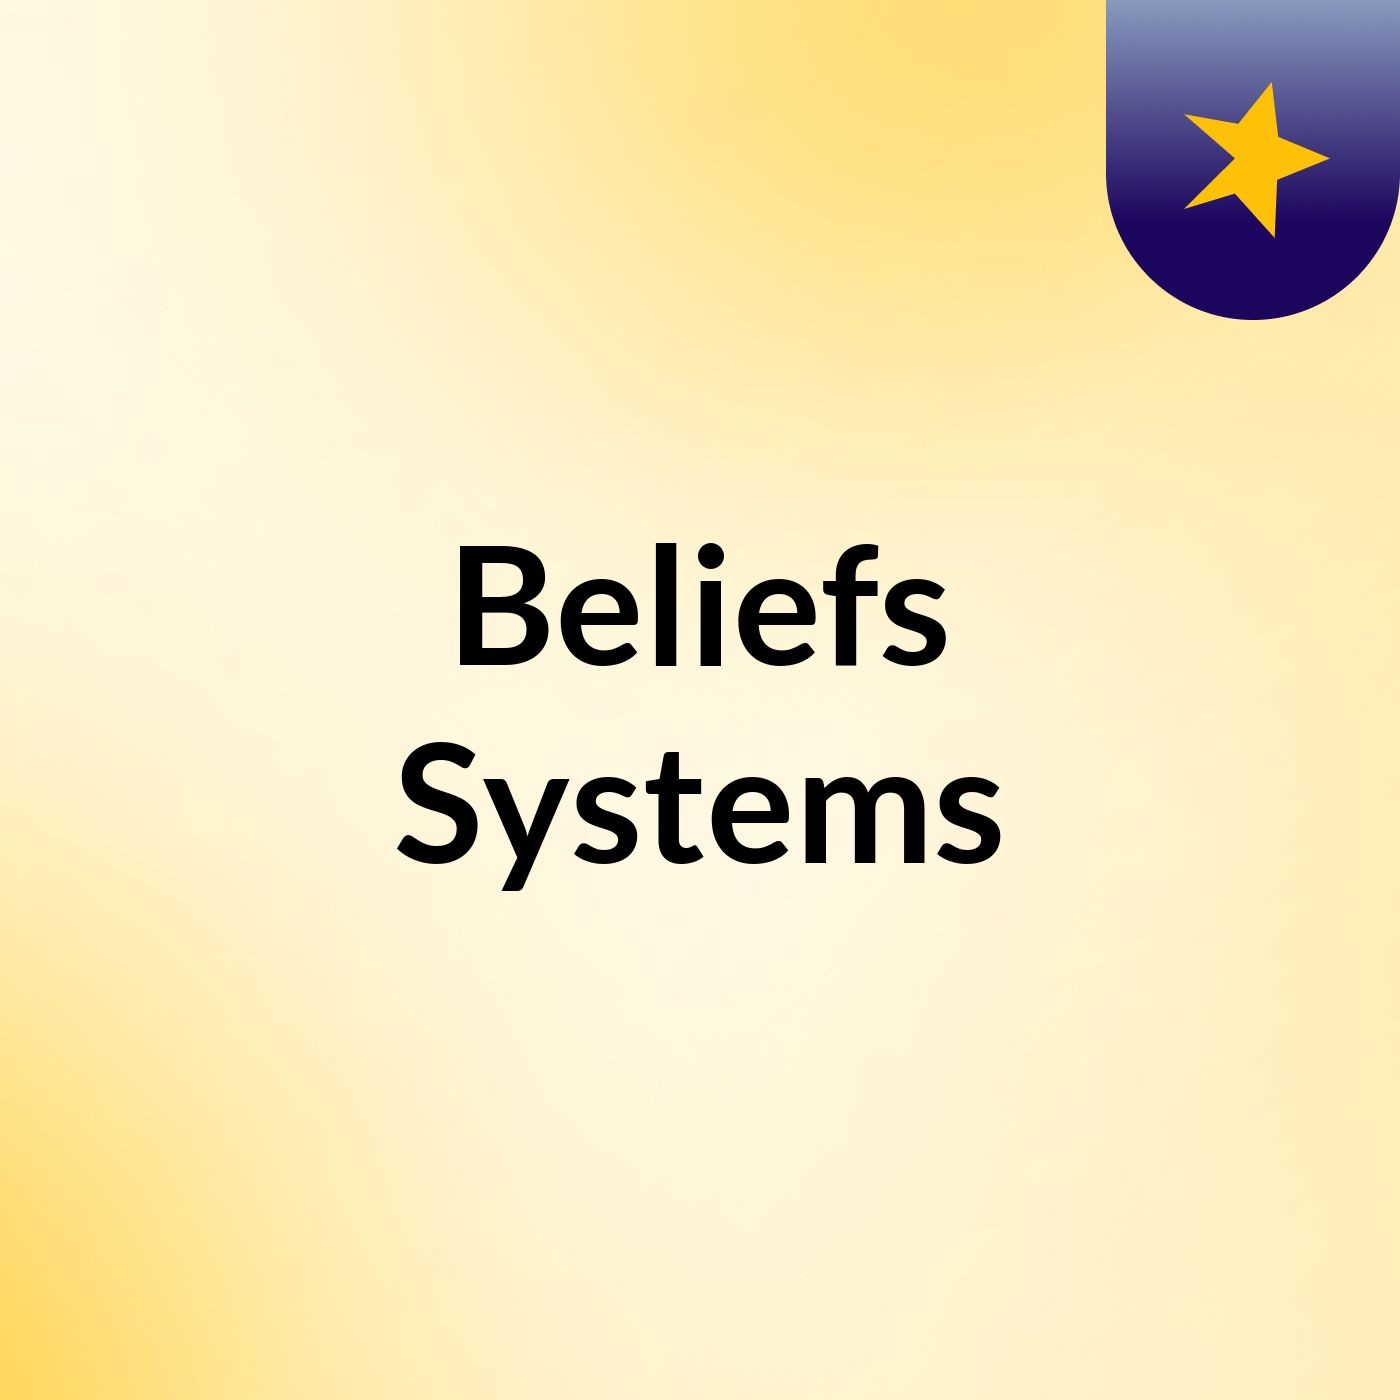 Beliefs Systems